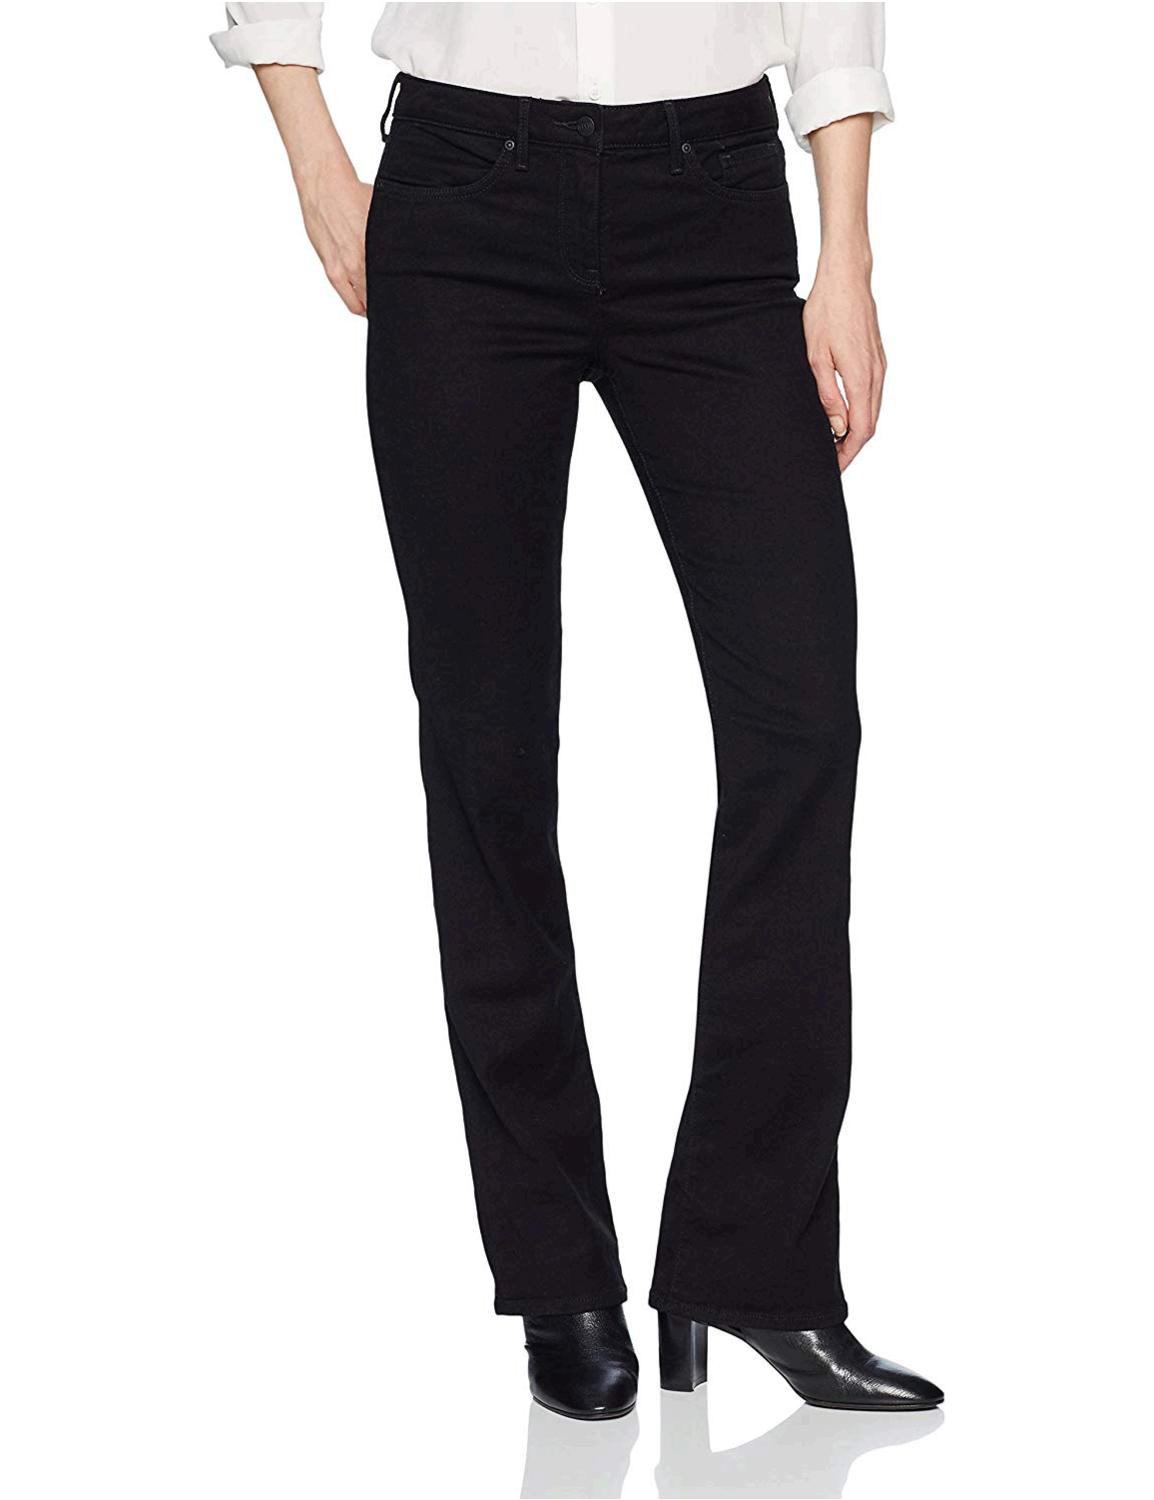 NYDJ Women's Barbara Bootcut Jeans, New Black, 12, New Black, Size 12.0 ...